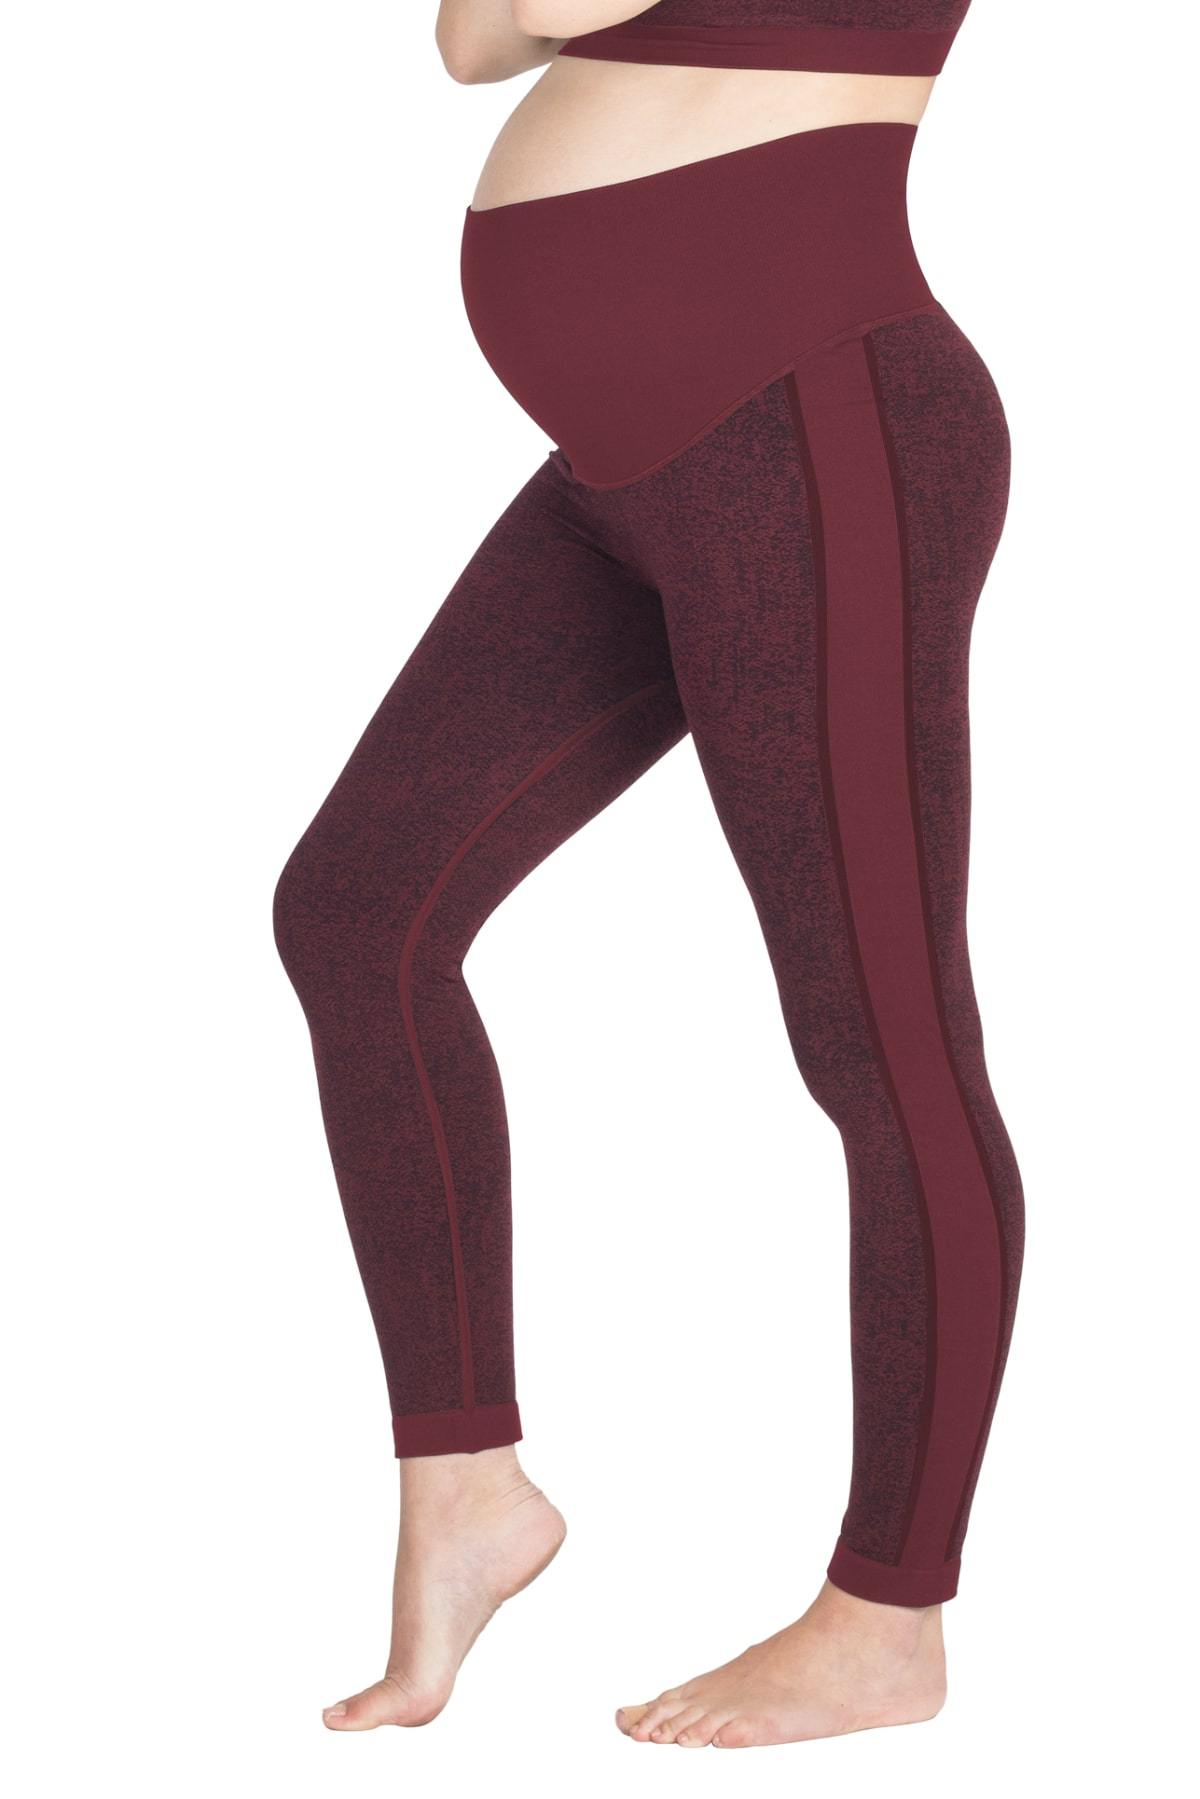 High Waisted Yoga Pants Gym Leggings Pregnant Dresses Pregnancy